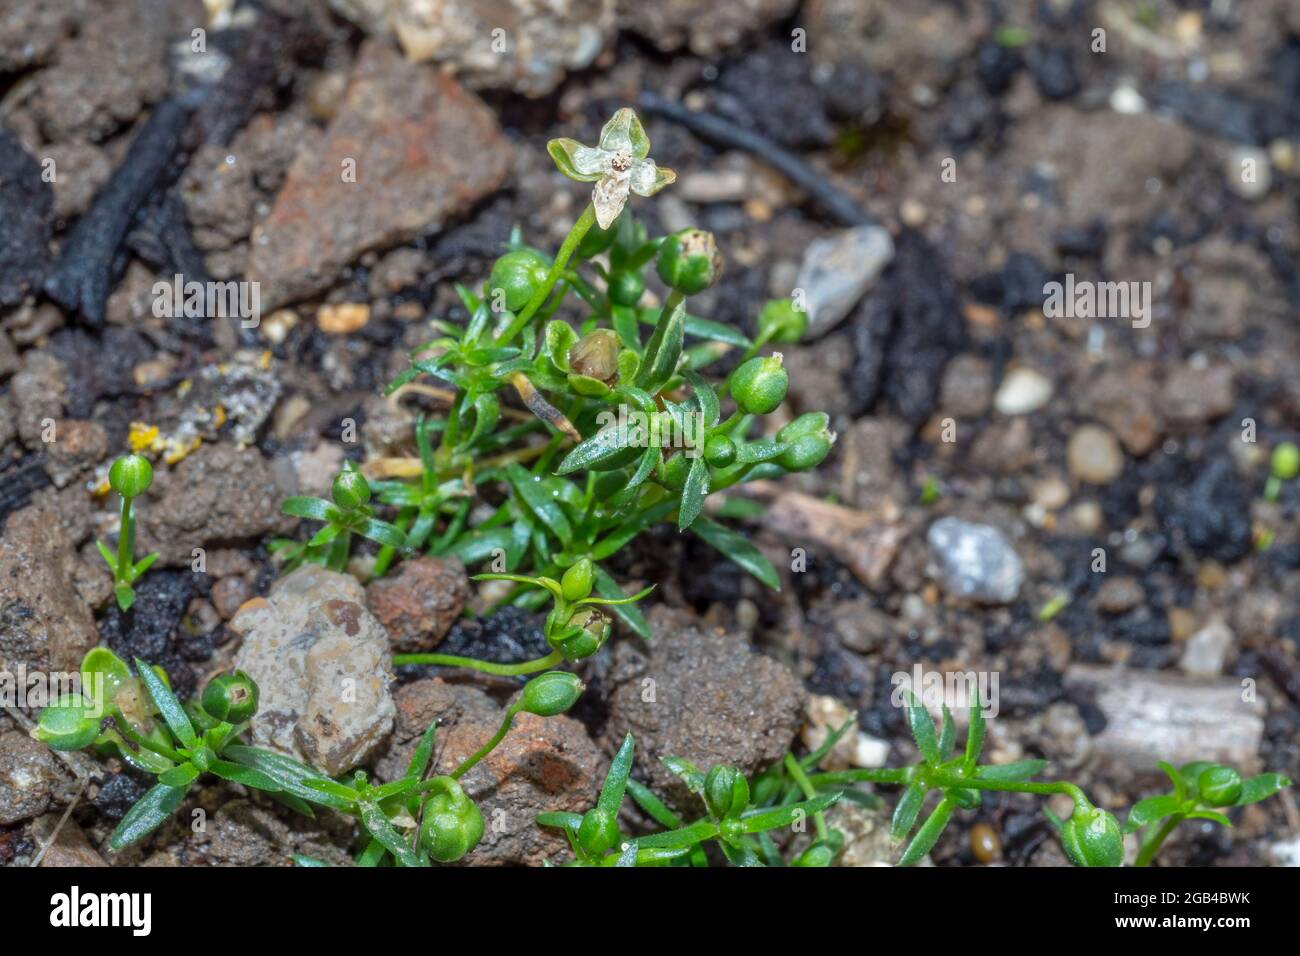 Sagina procumbens aka Pearlwort. Tiny moss-like plant with white flowers. Stock Photo